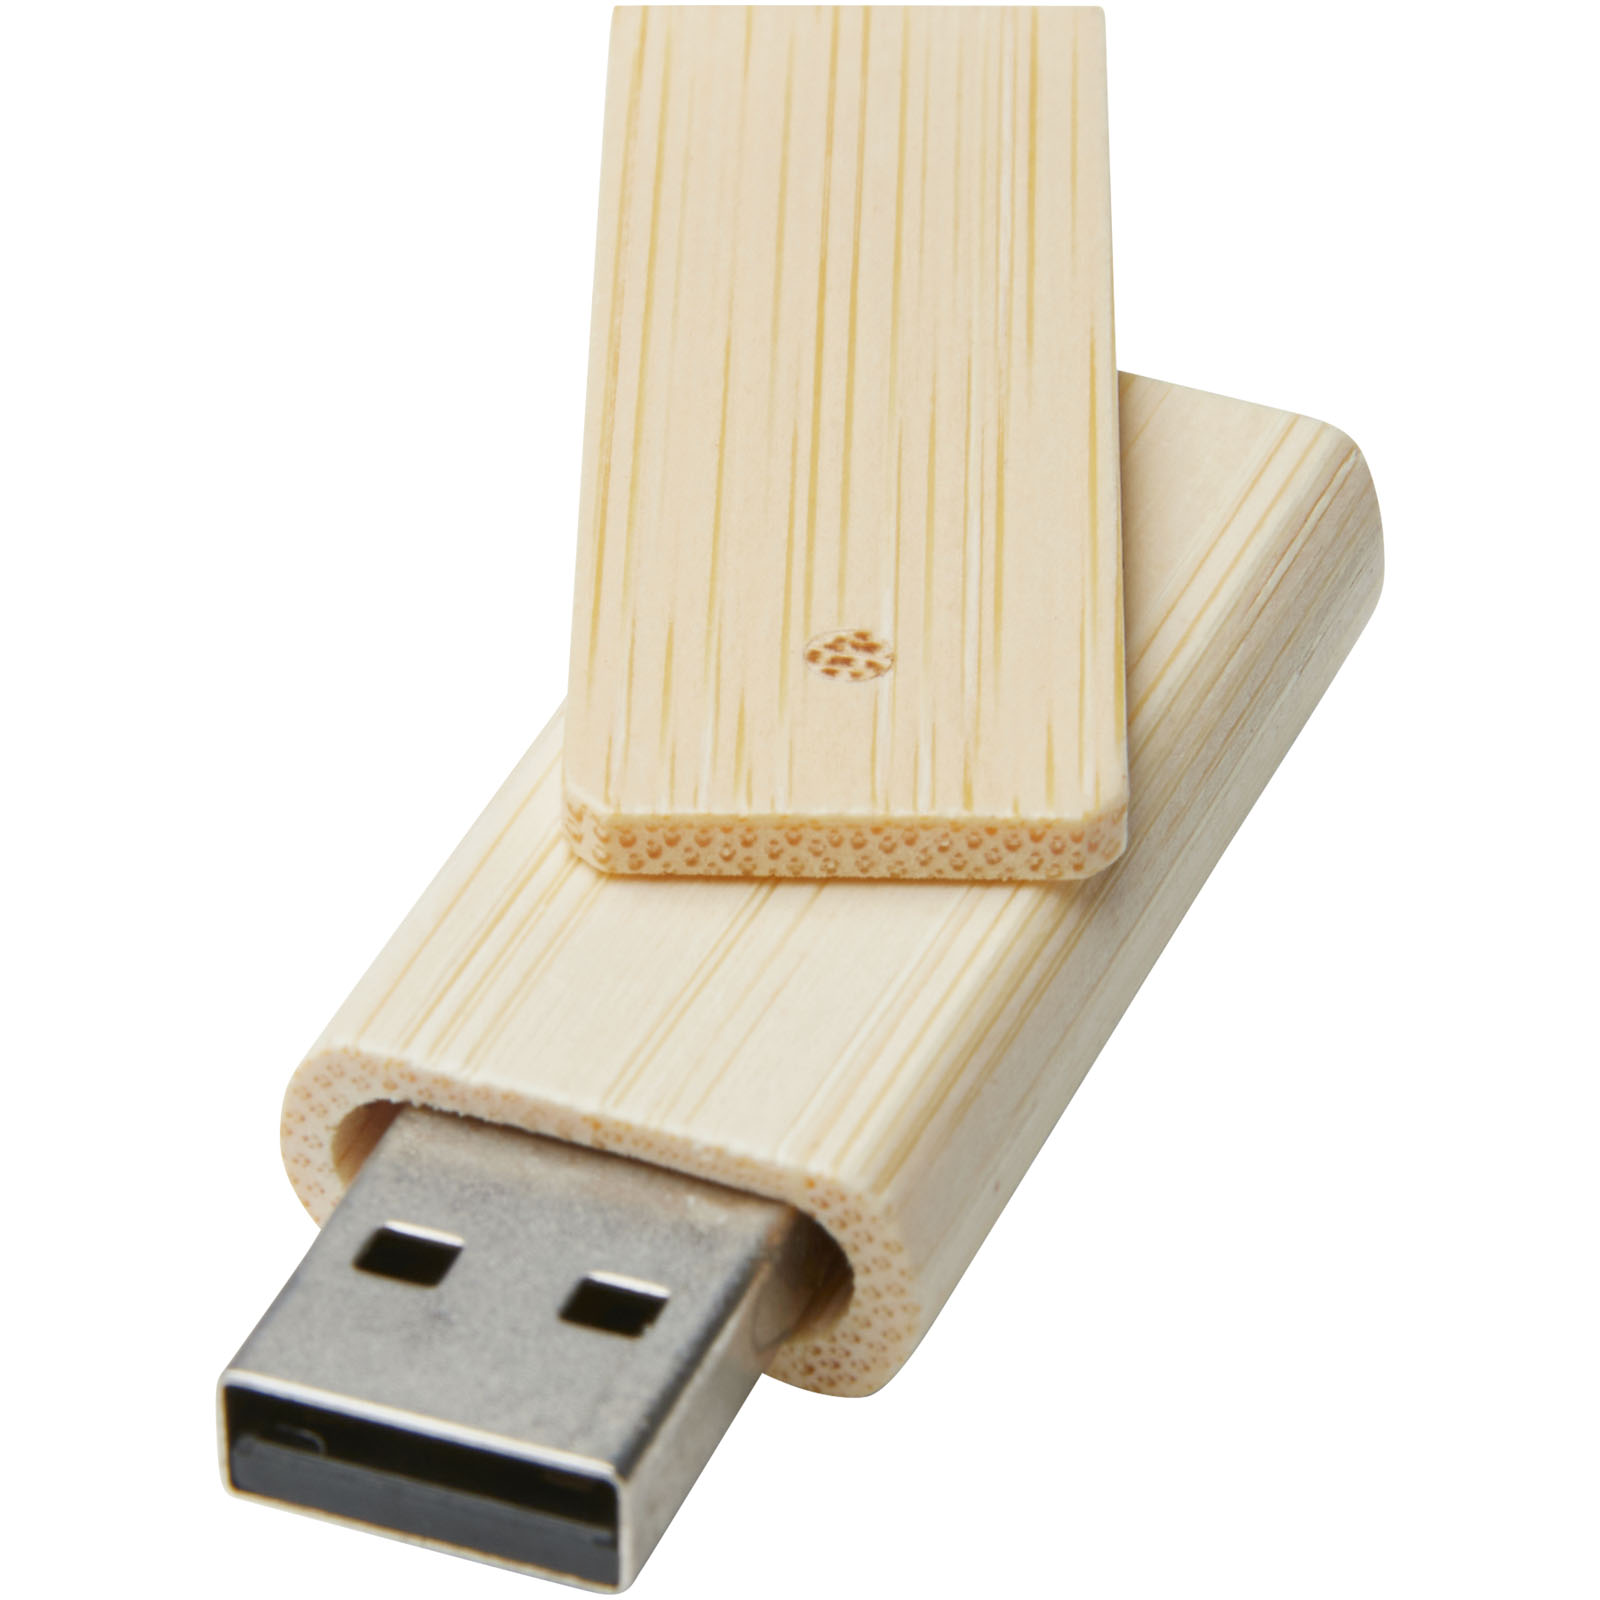 Clé USB 2.0 BambooRotate - 16GB - Bourron-Marlotte - Zaprinta Belgique